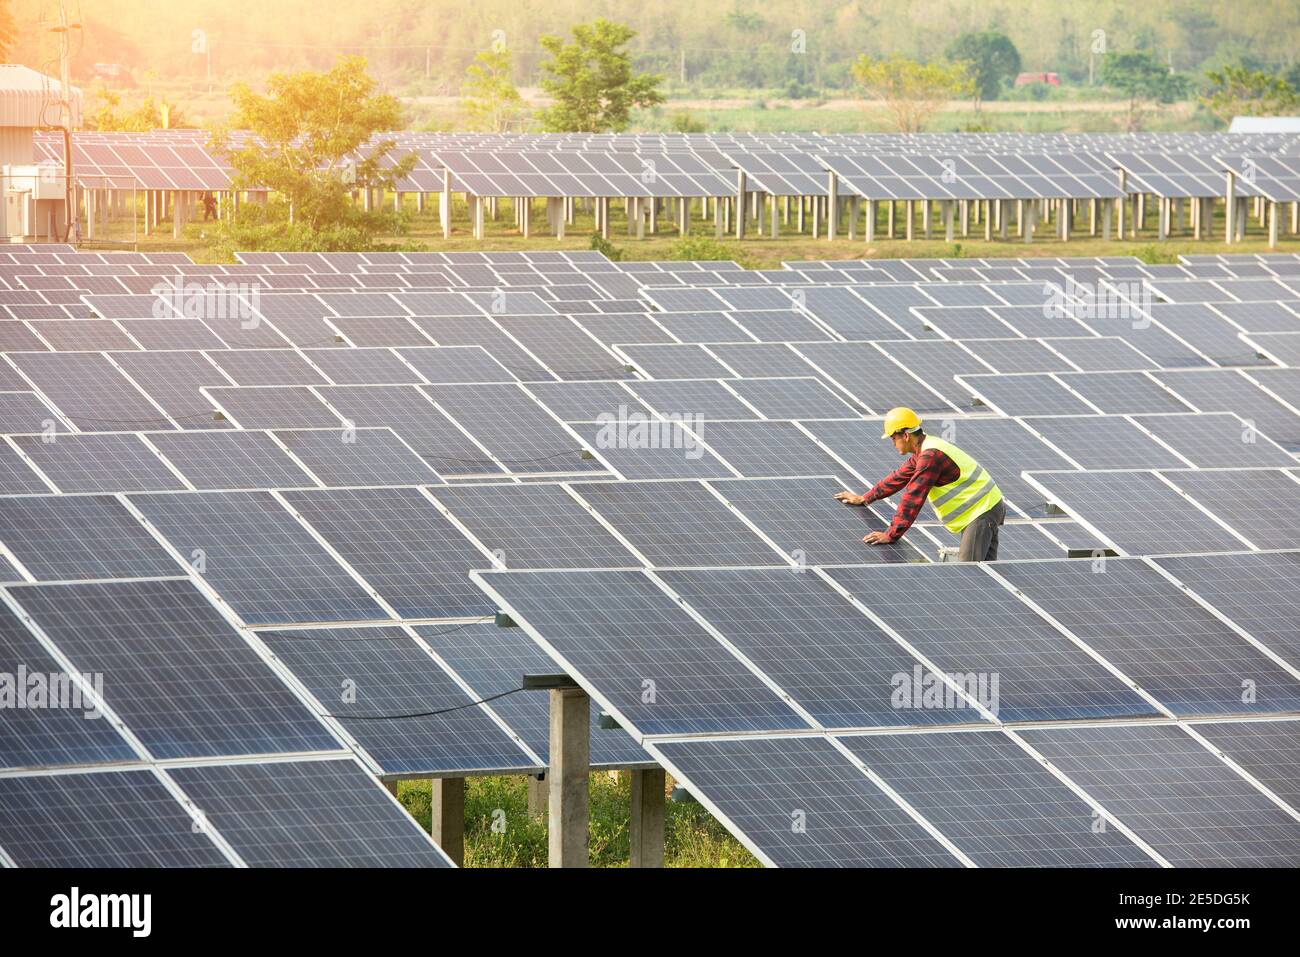 Portrait of an engineer working on solar panels on a solar farm, Thailand Stock Photo